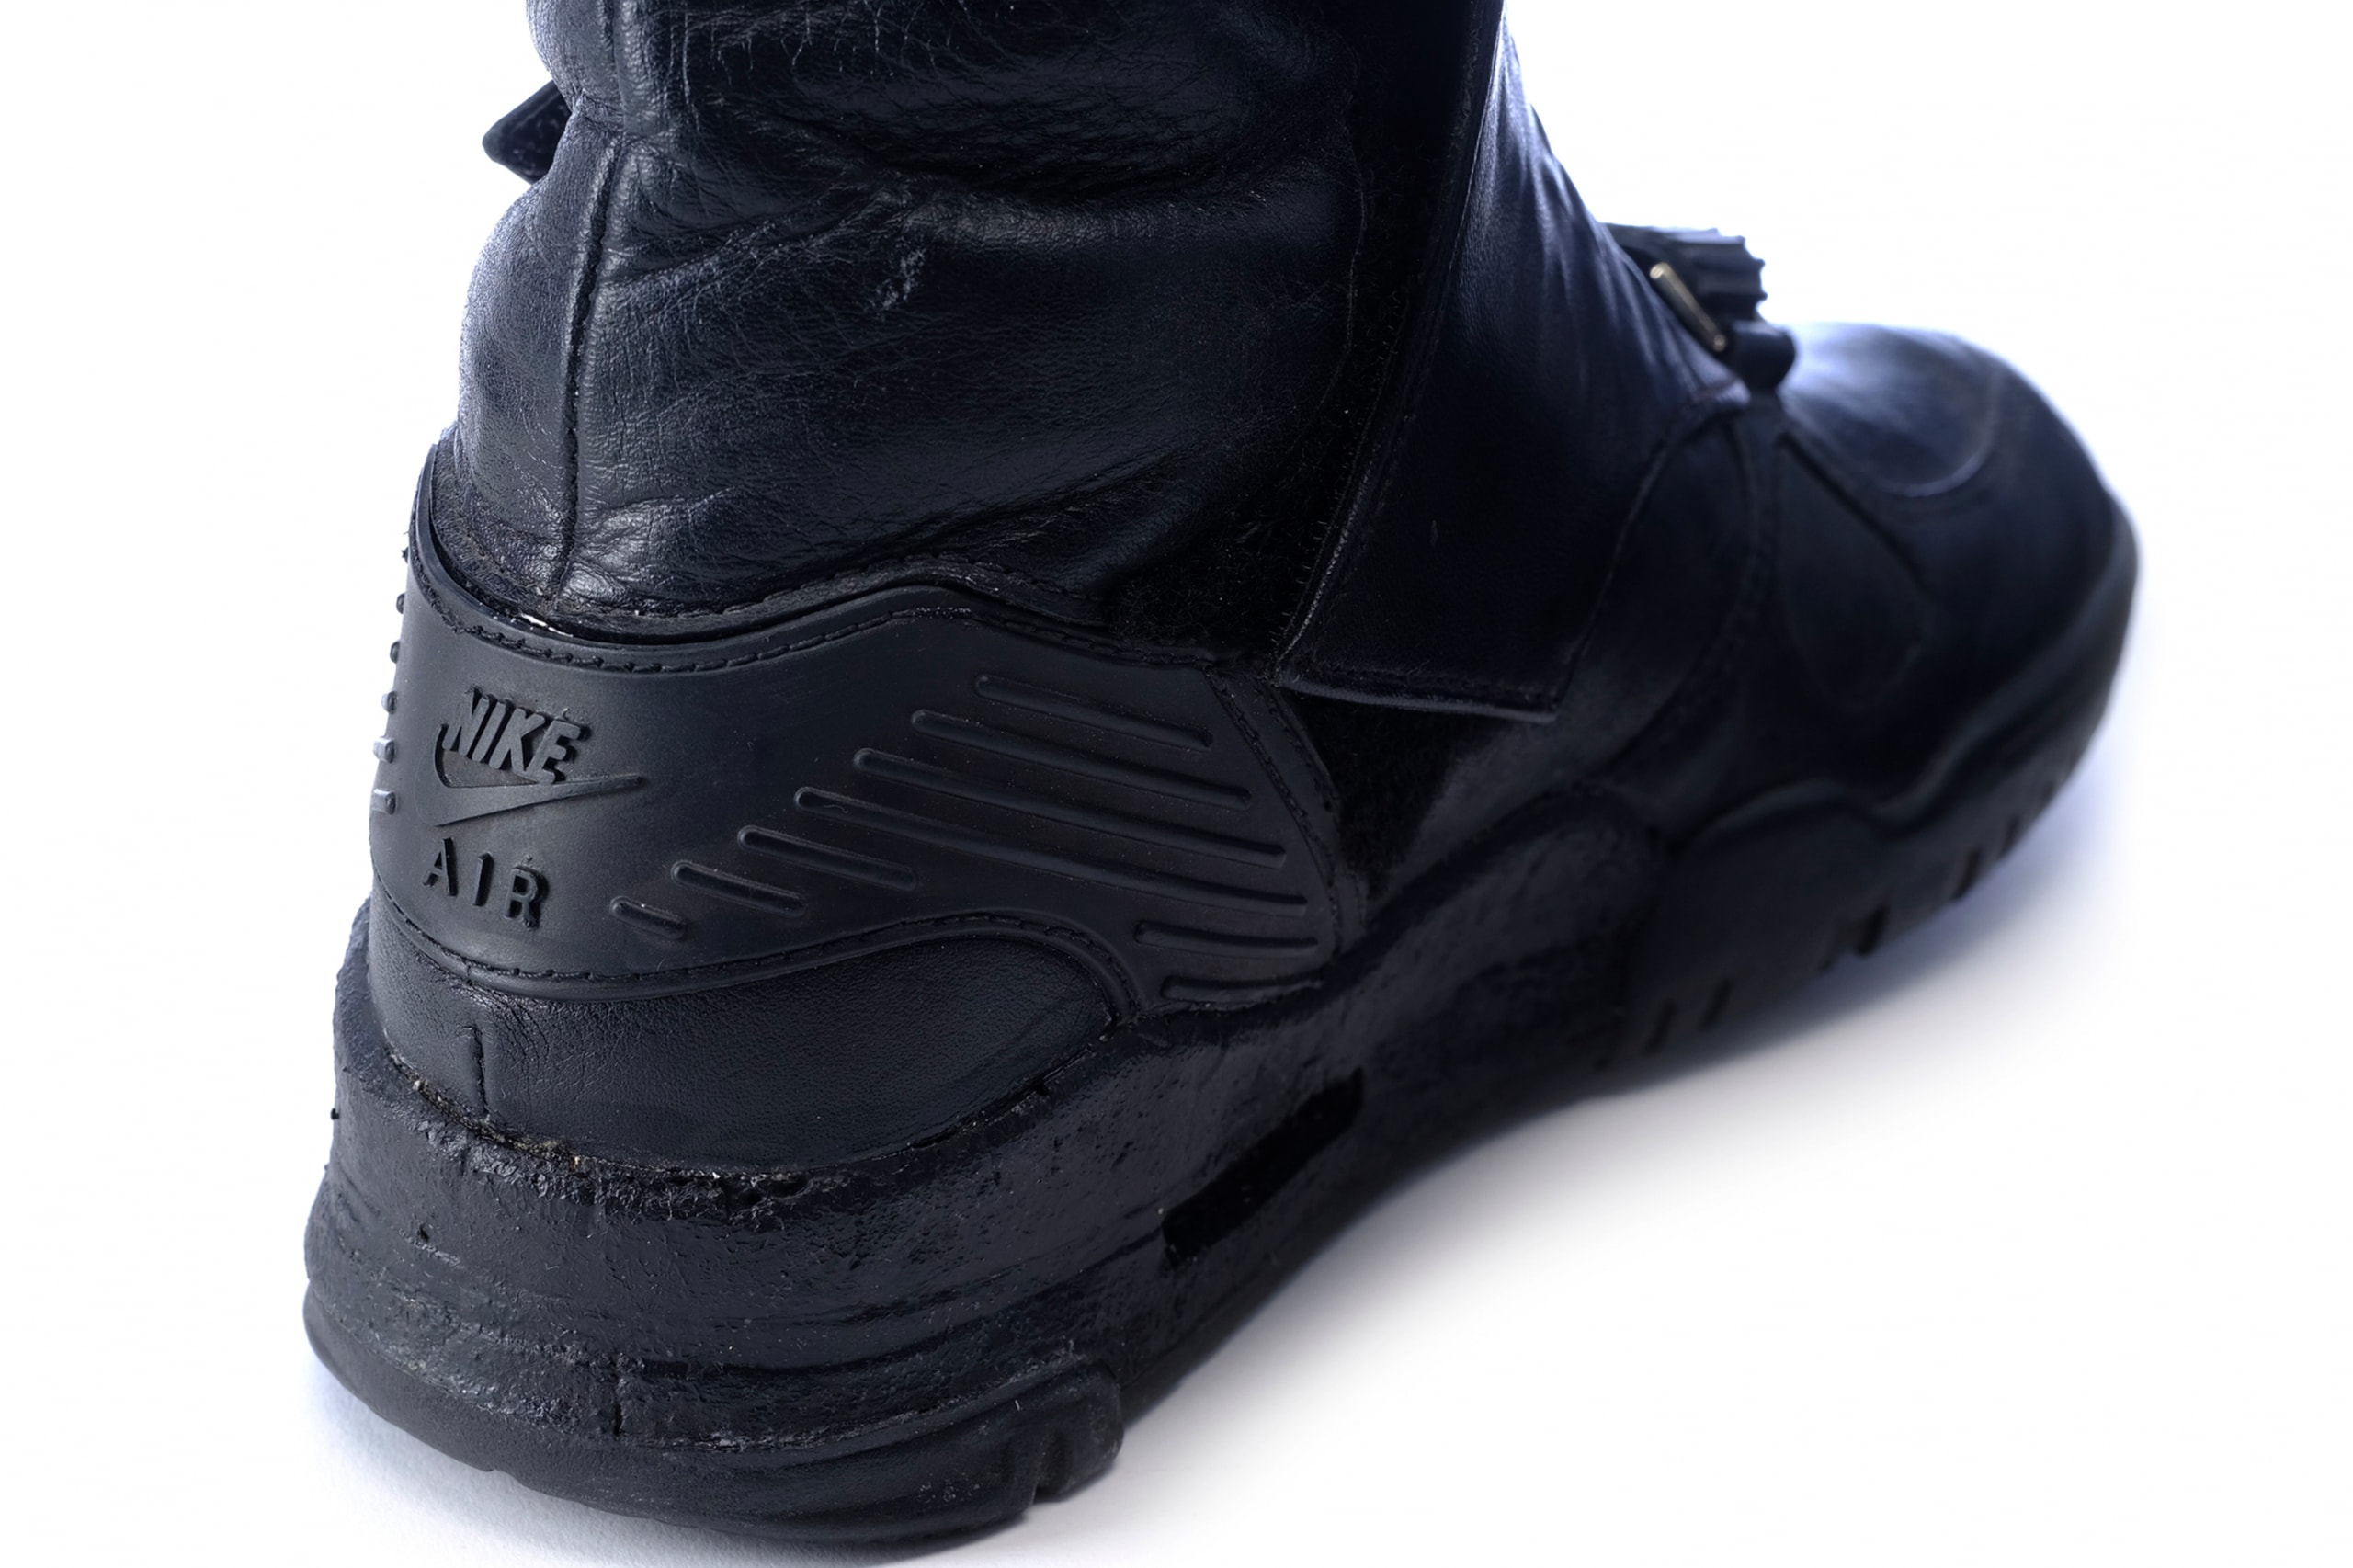 Batman 1989 Michael Keaton Nike Air Trainer Bat Boots Propstore Auction shoe sneakers footwear kicks props 